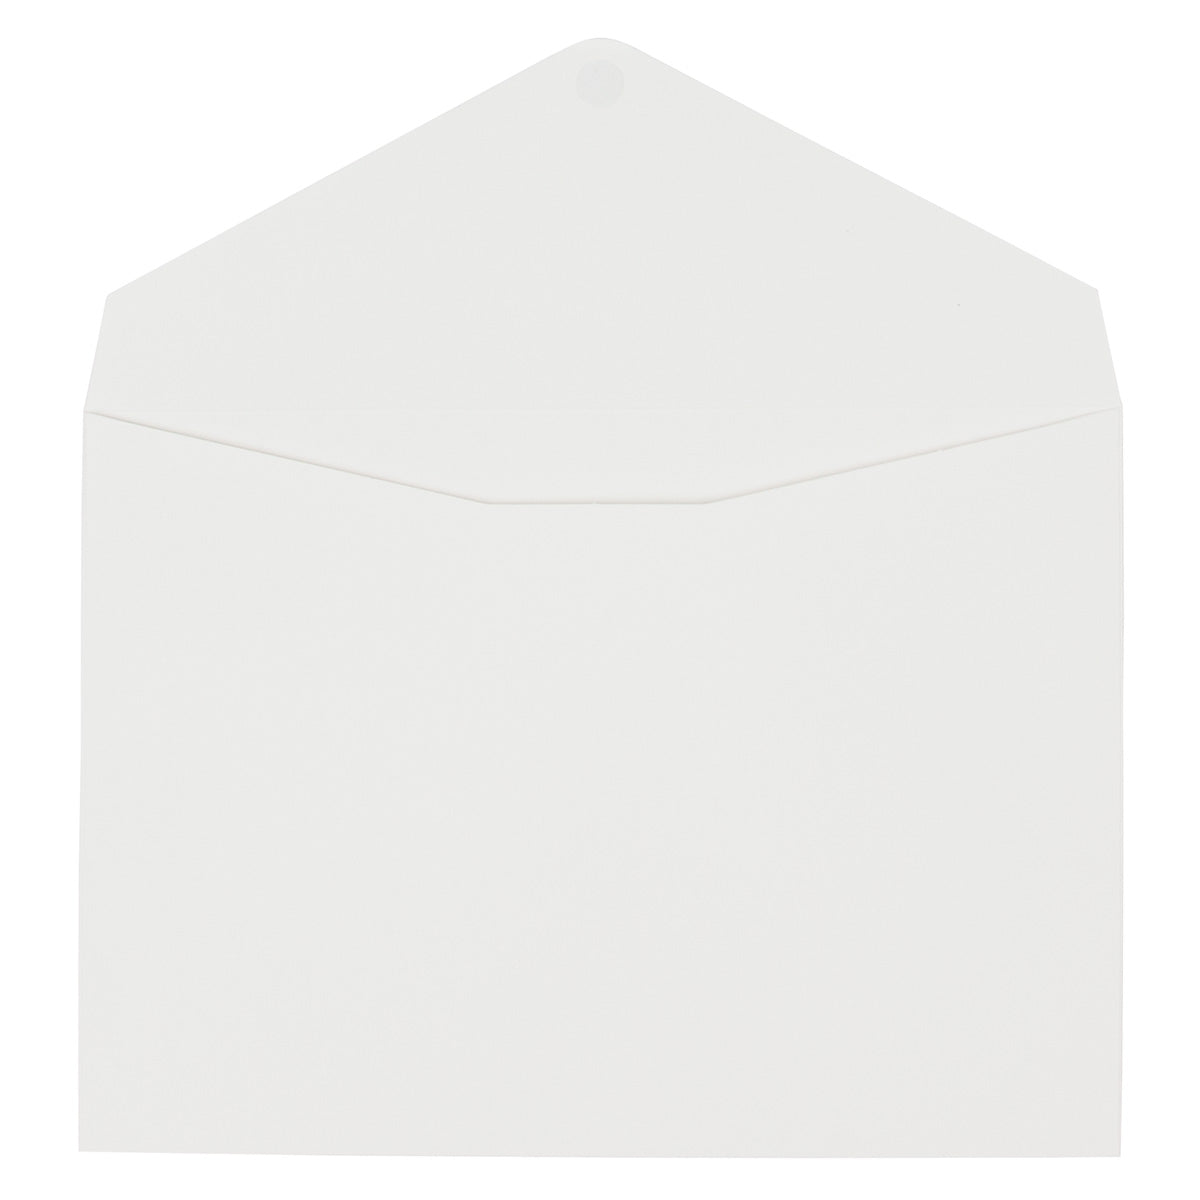 Paklijst enveloppen met klepsluiting